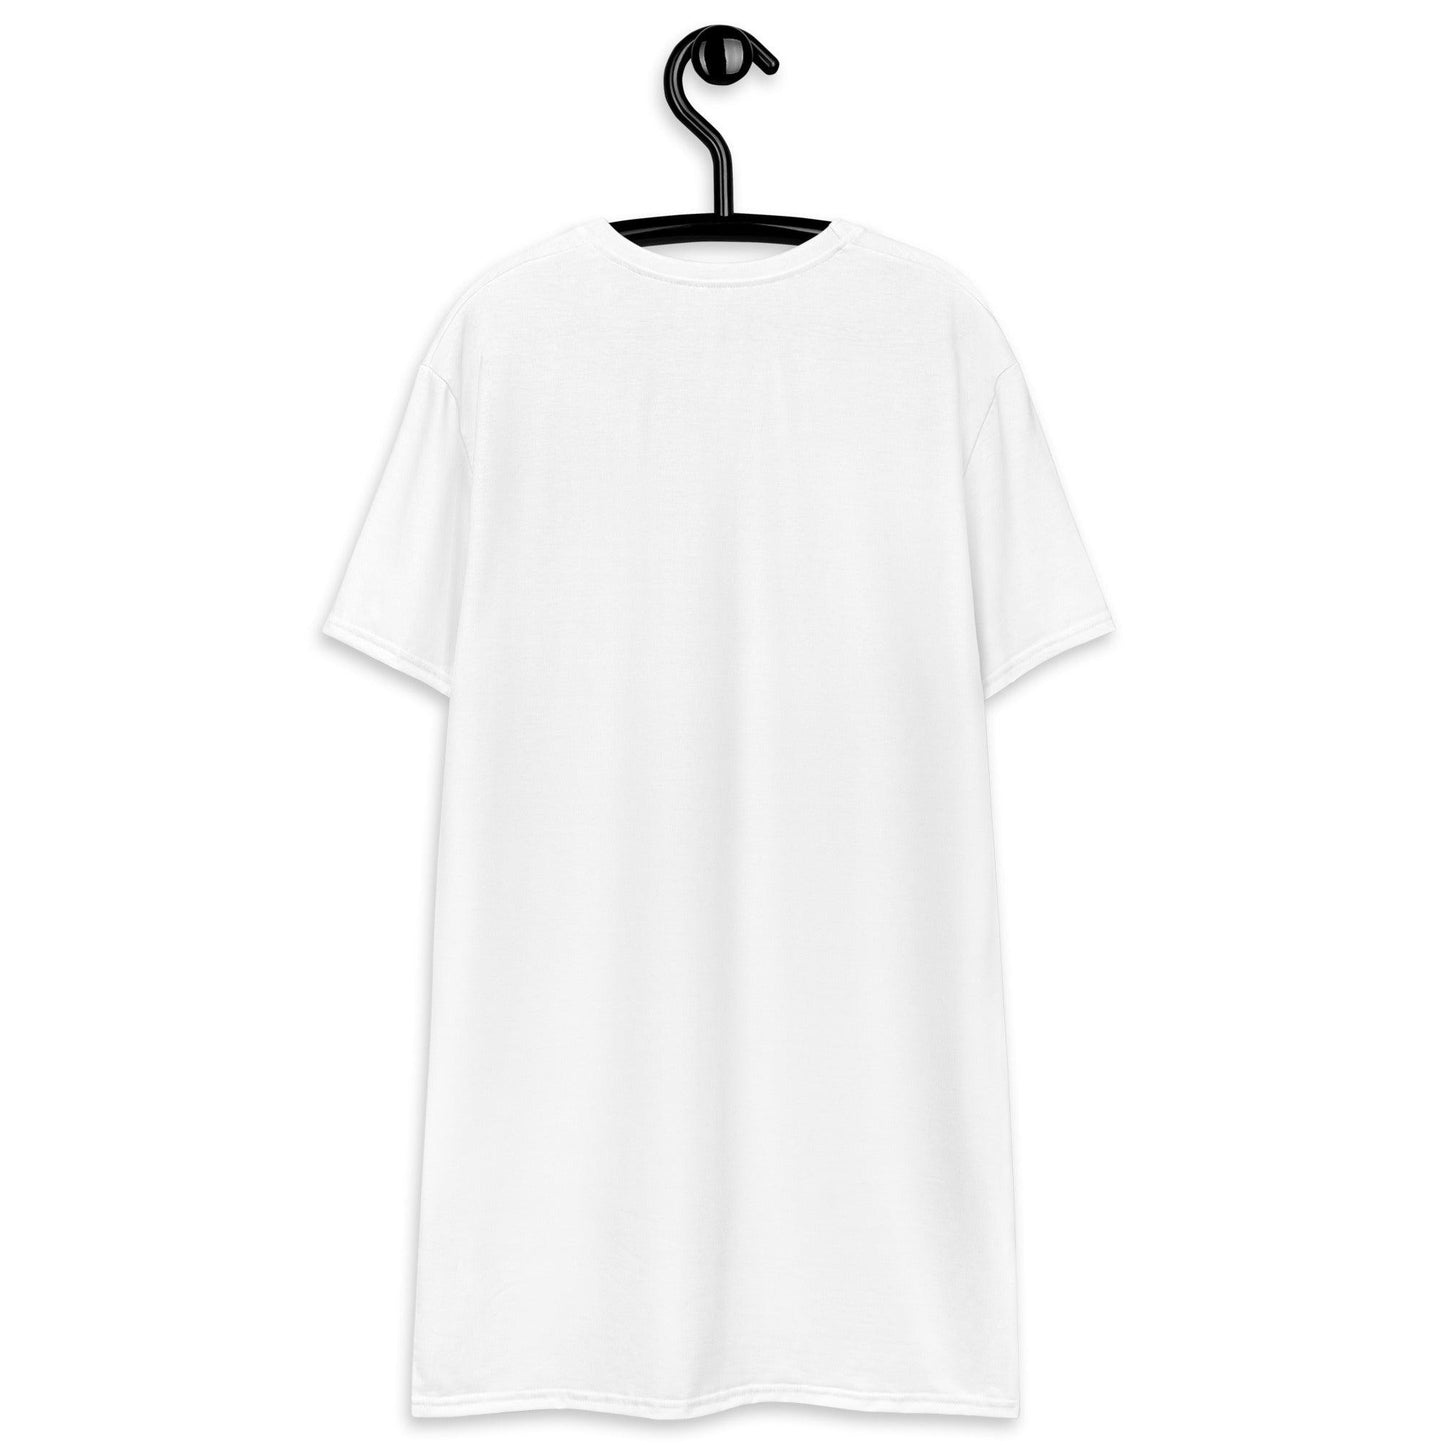 Sweet Child Of Wine - Womens White T-Shirt Dress - iSAW Company